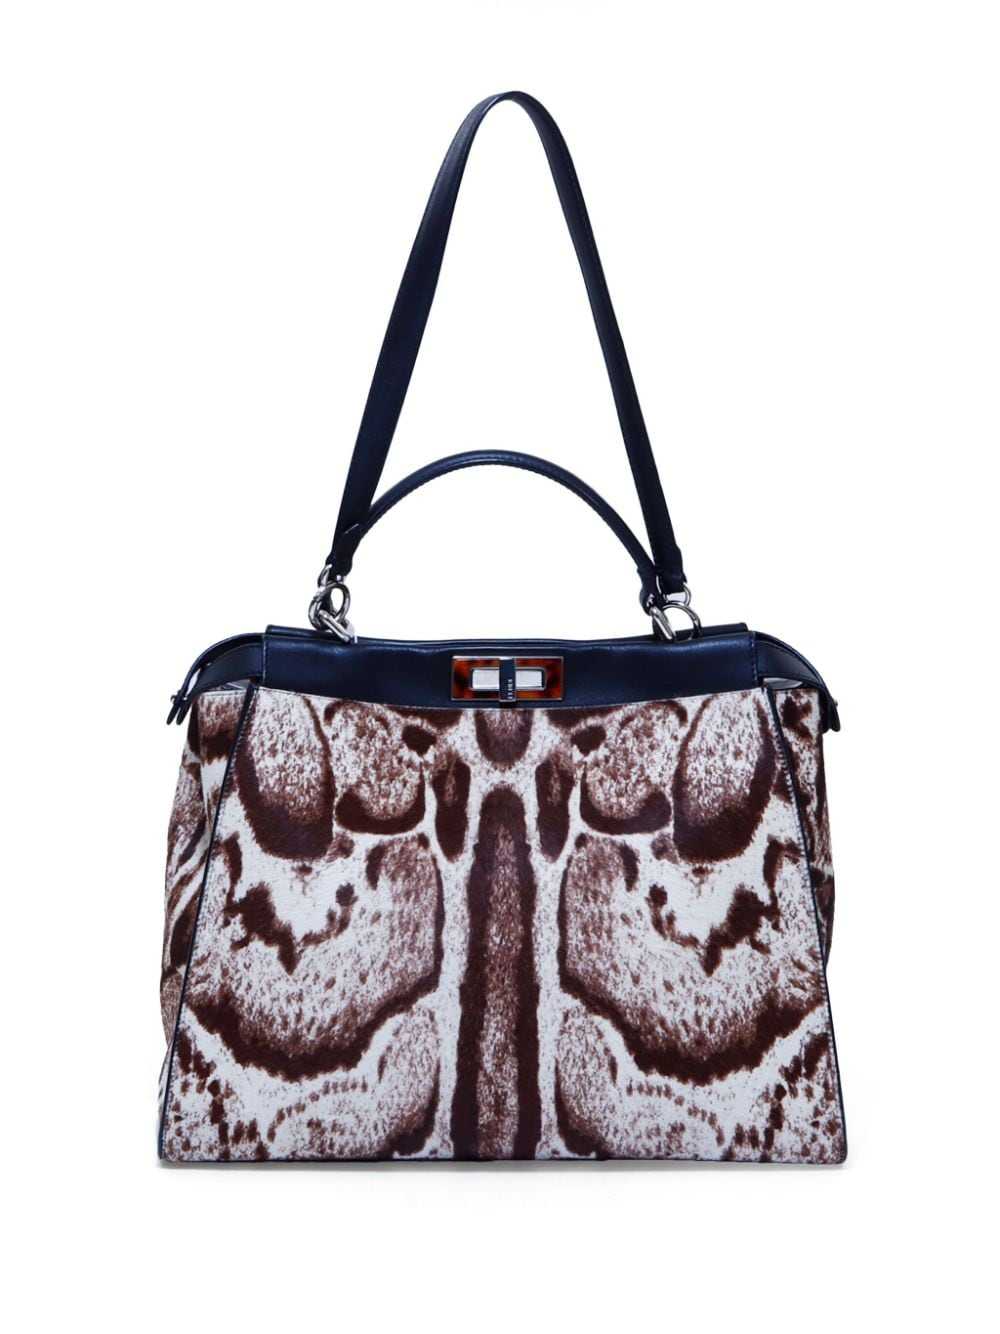 Fendi Pre-Owned Peekaboo leather handbag - Brown - image 2